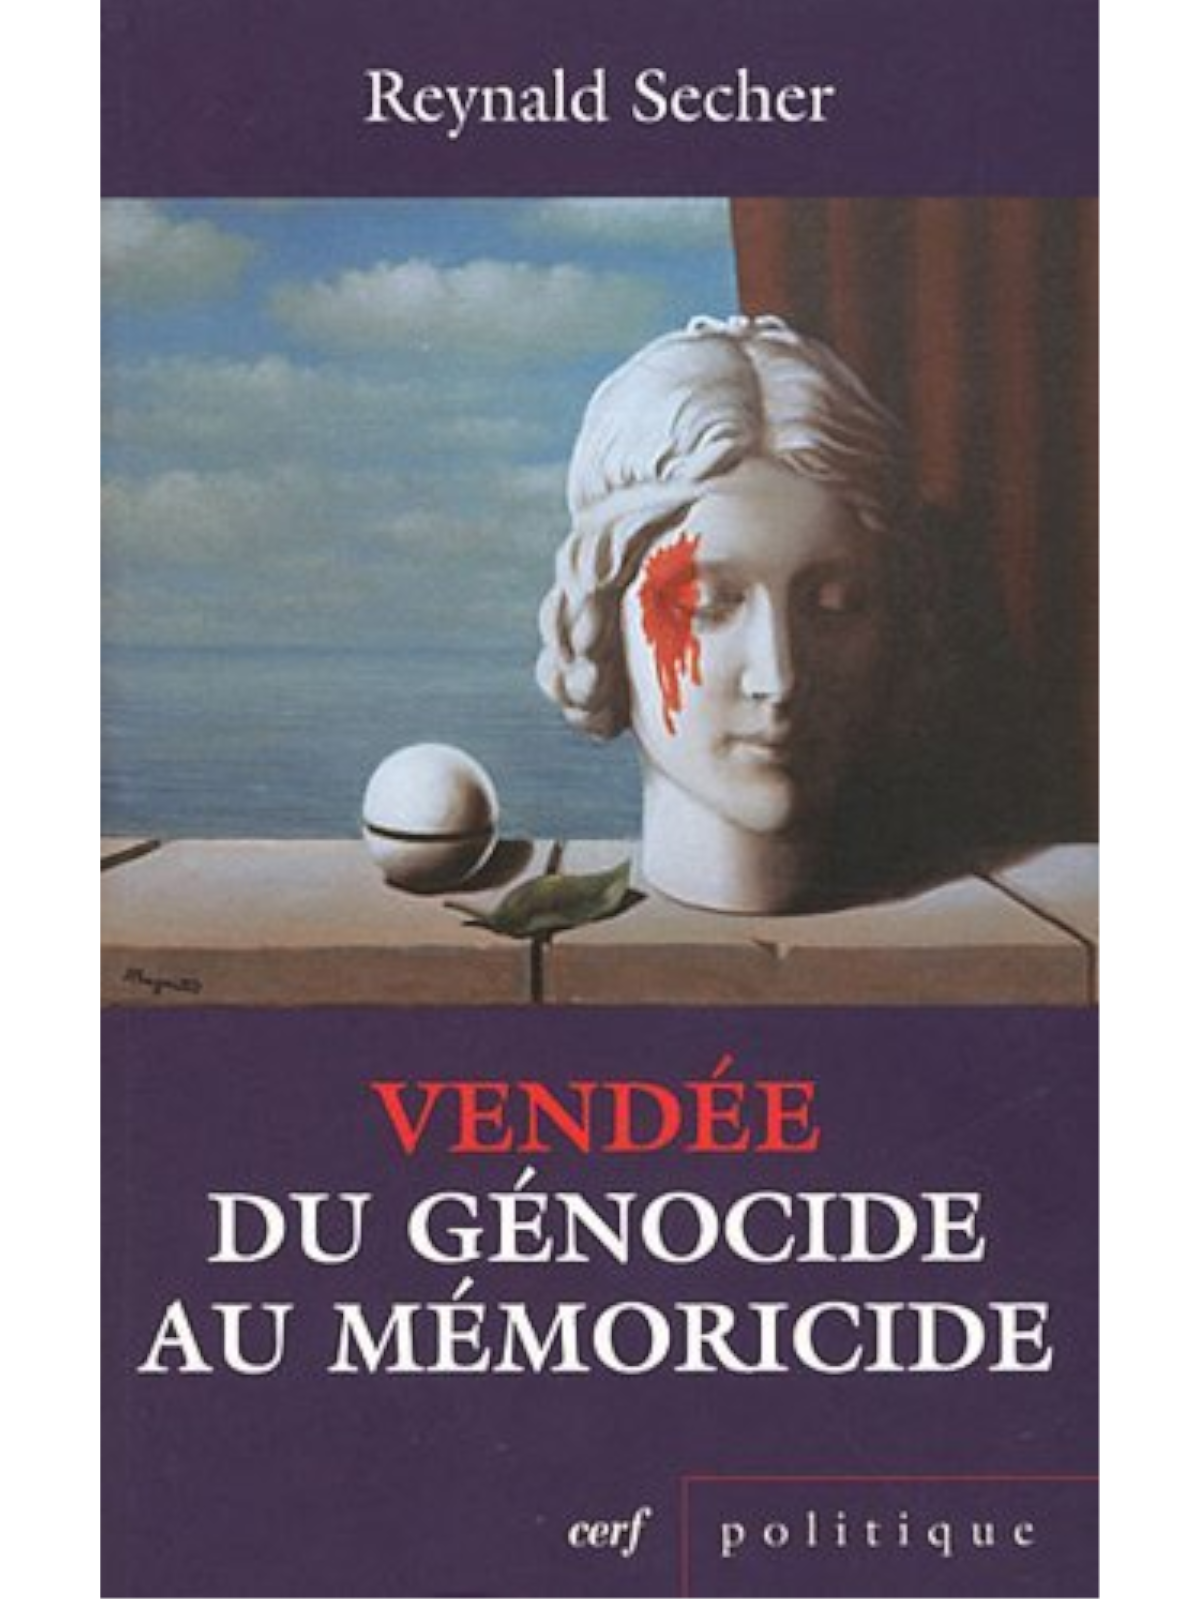 Reynald Secher : Vendée du génocide au mémoricide